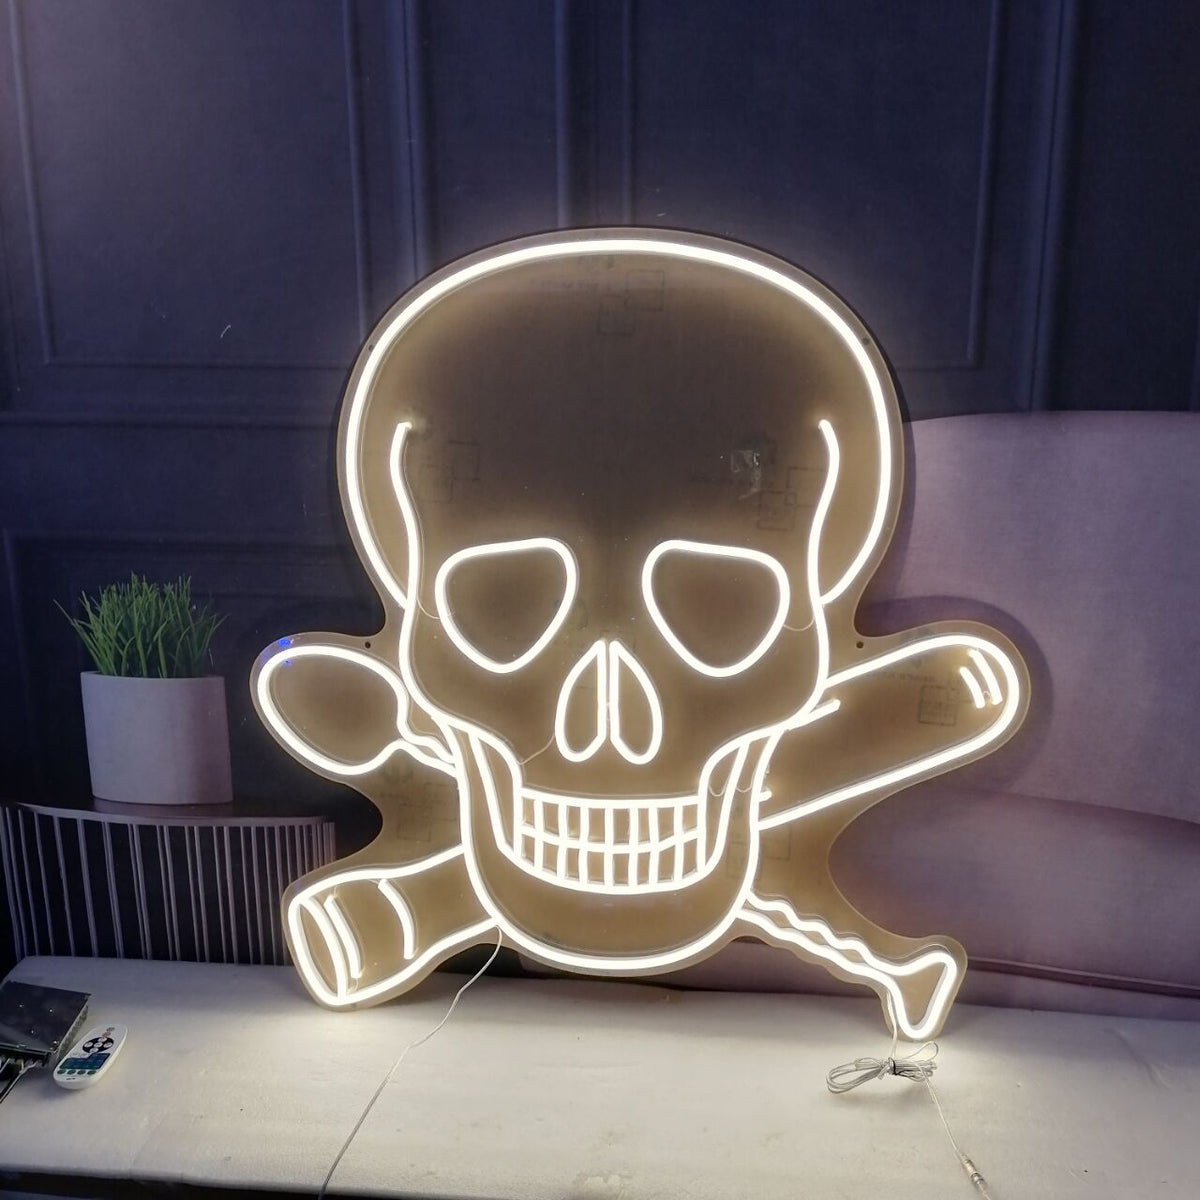 Skull and Crossbones Neon Sign